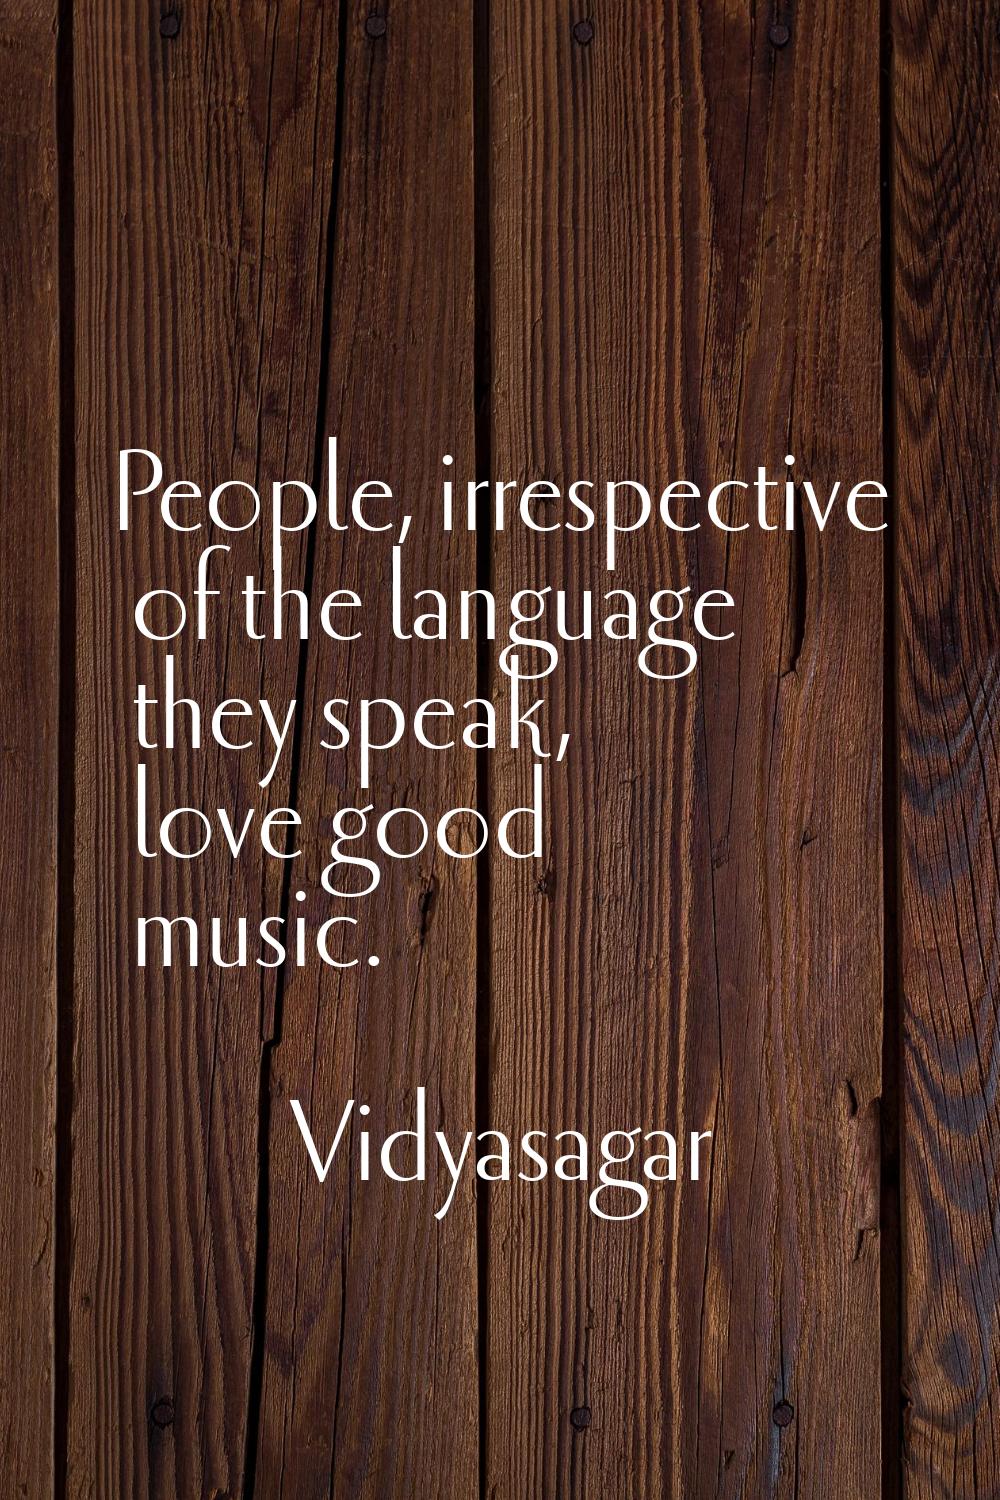 People, irrespective of the language they speak, love good music.